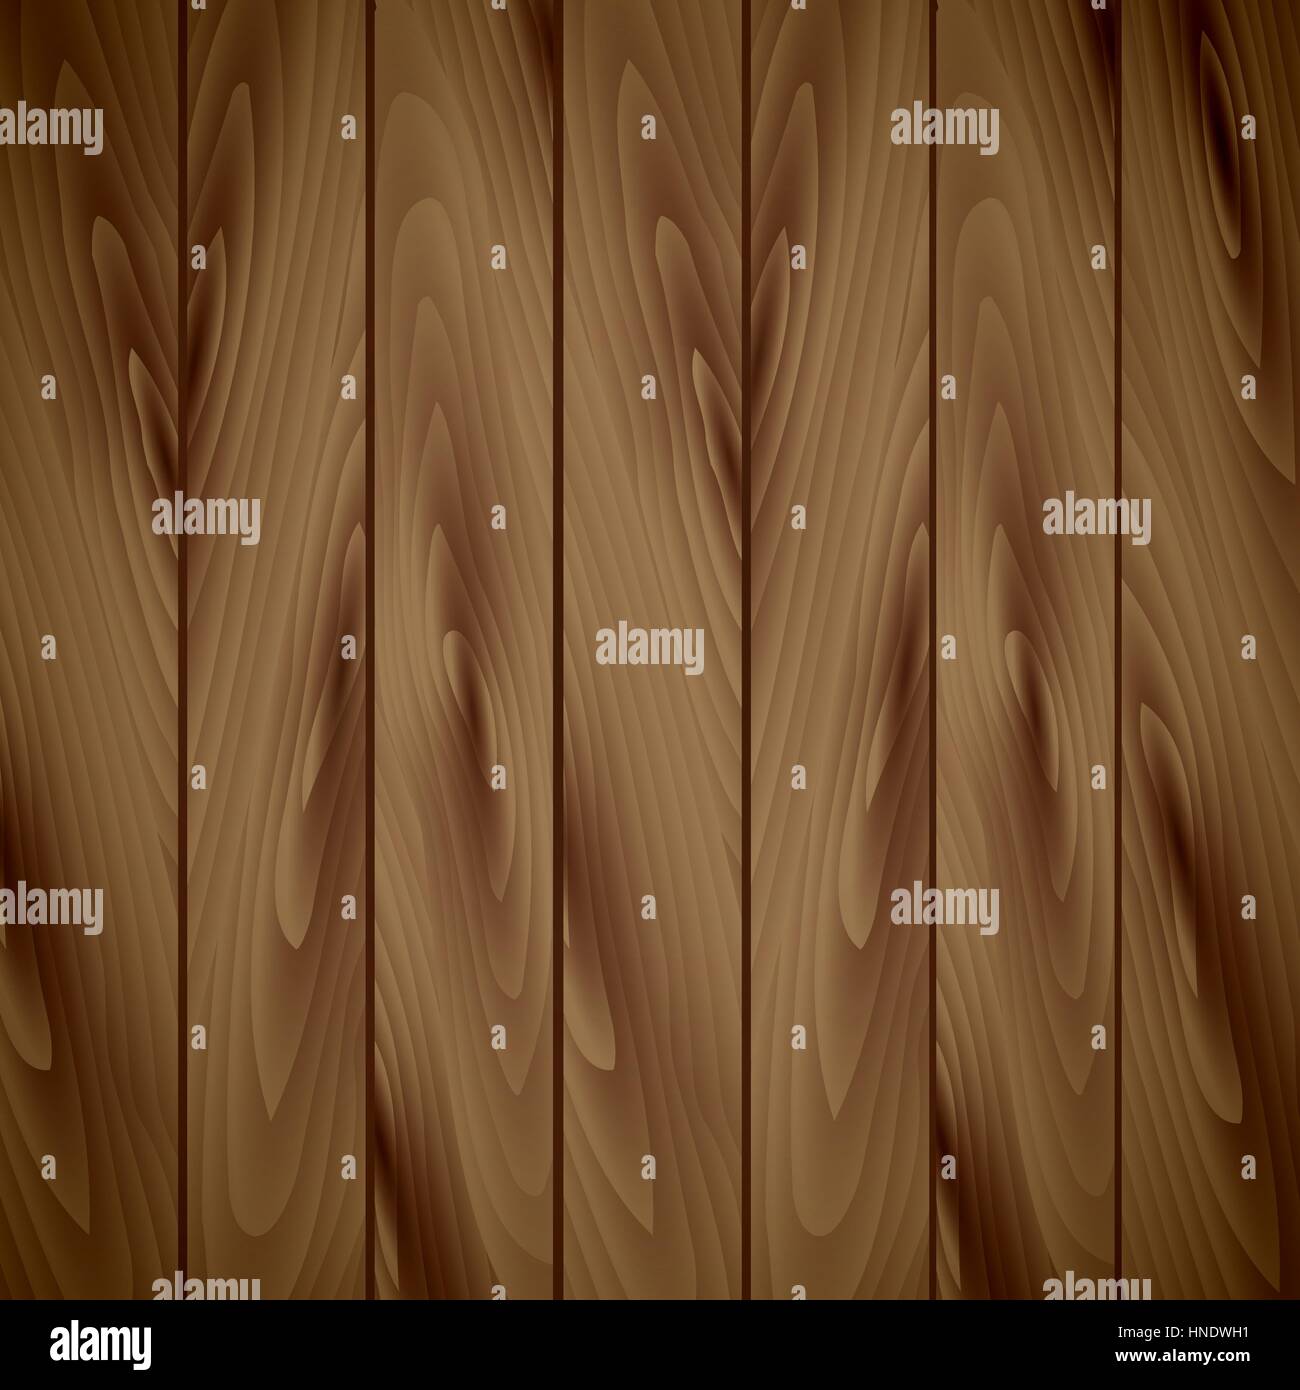 Wood texture template Stock Vector